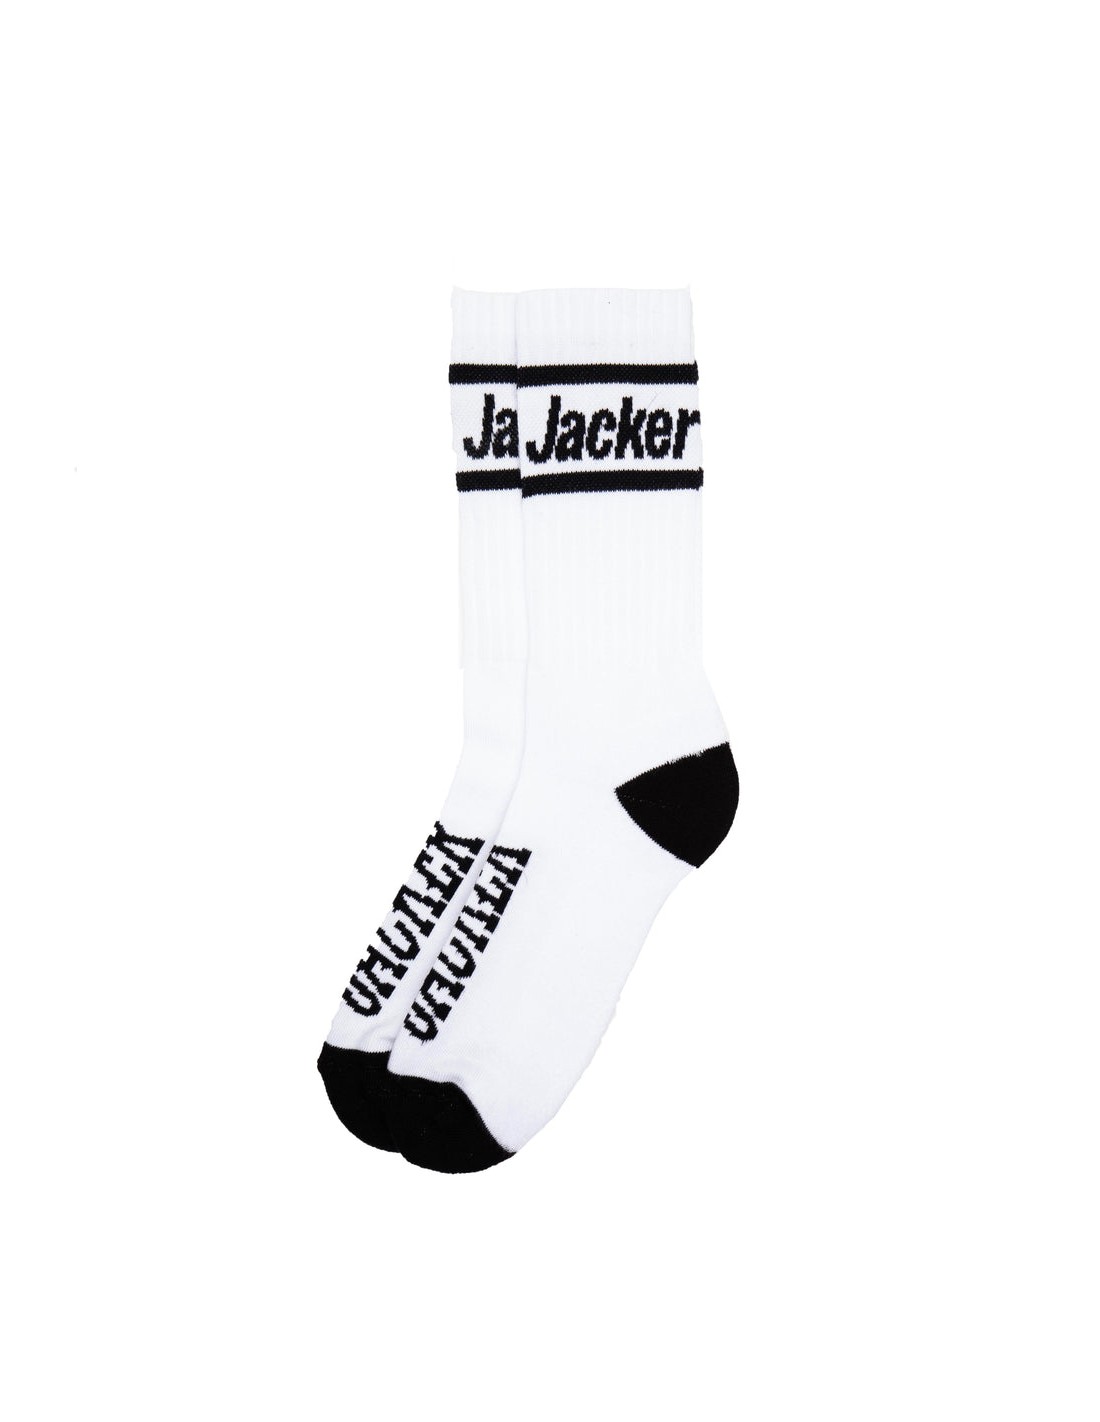 JACKER After logo - White - Socks